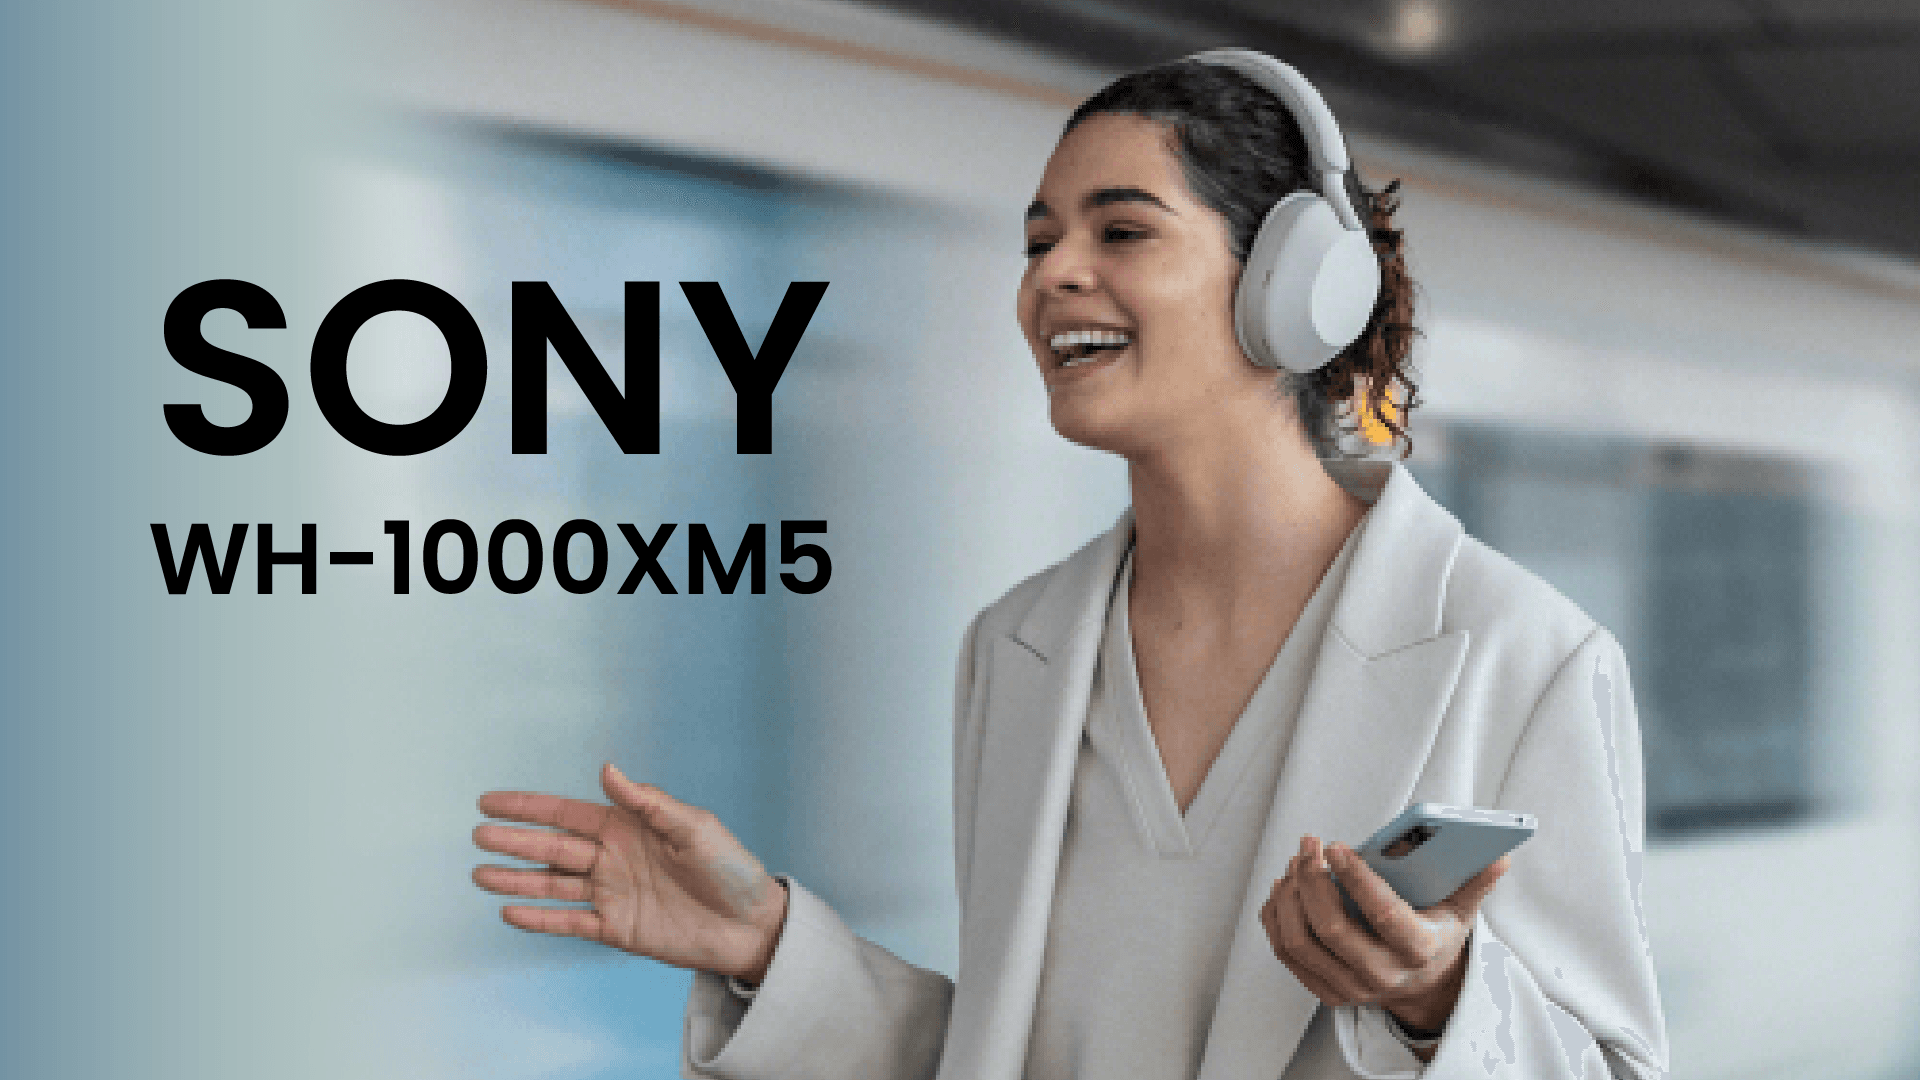 Top-notch audio quality by Sony WH-1000XM5